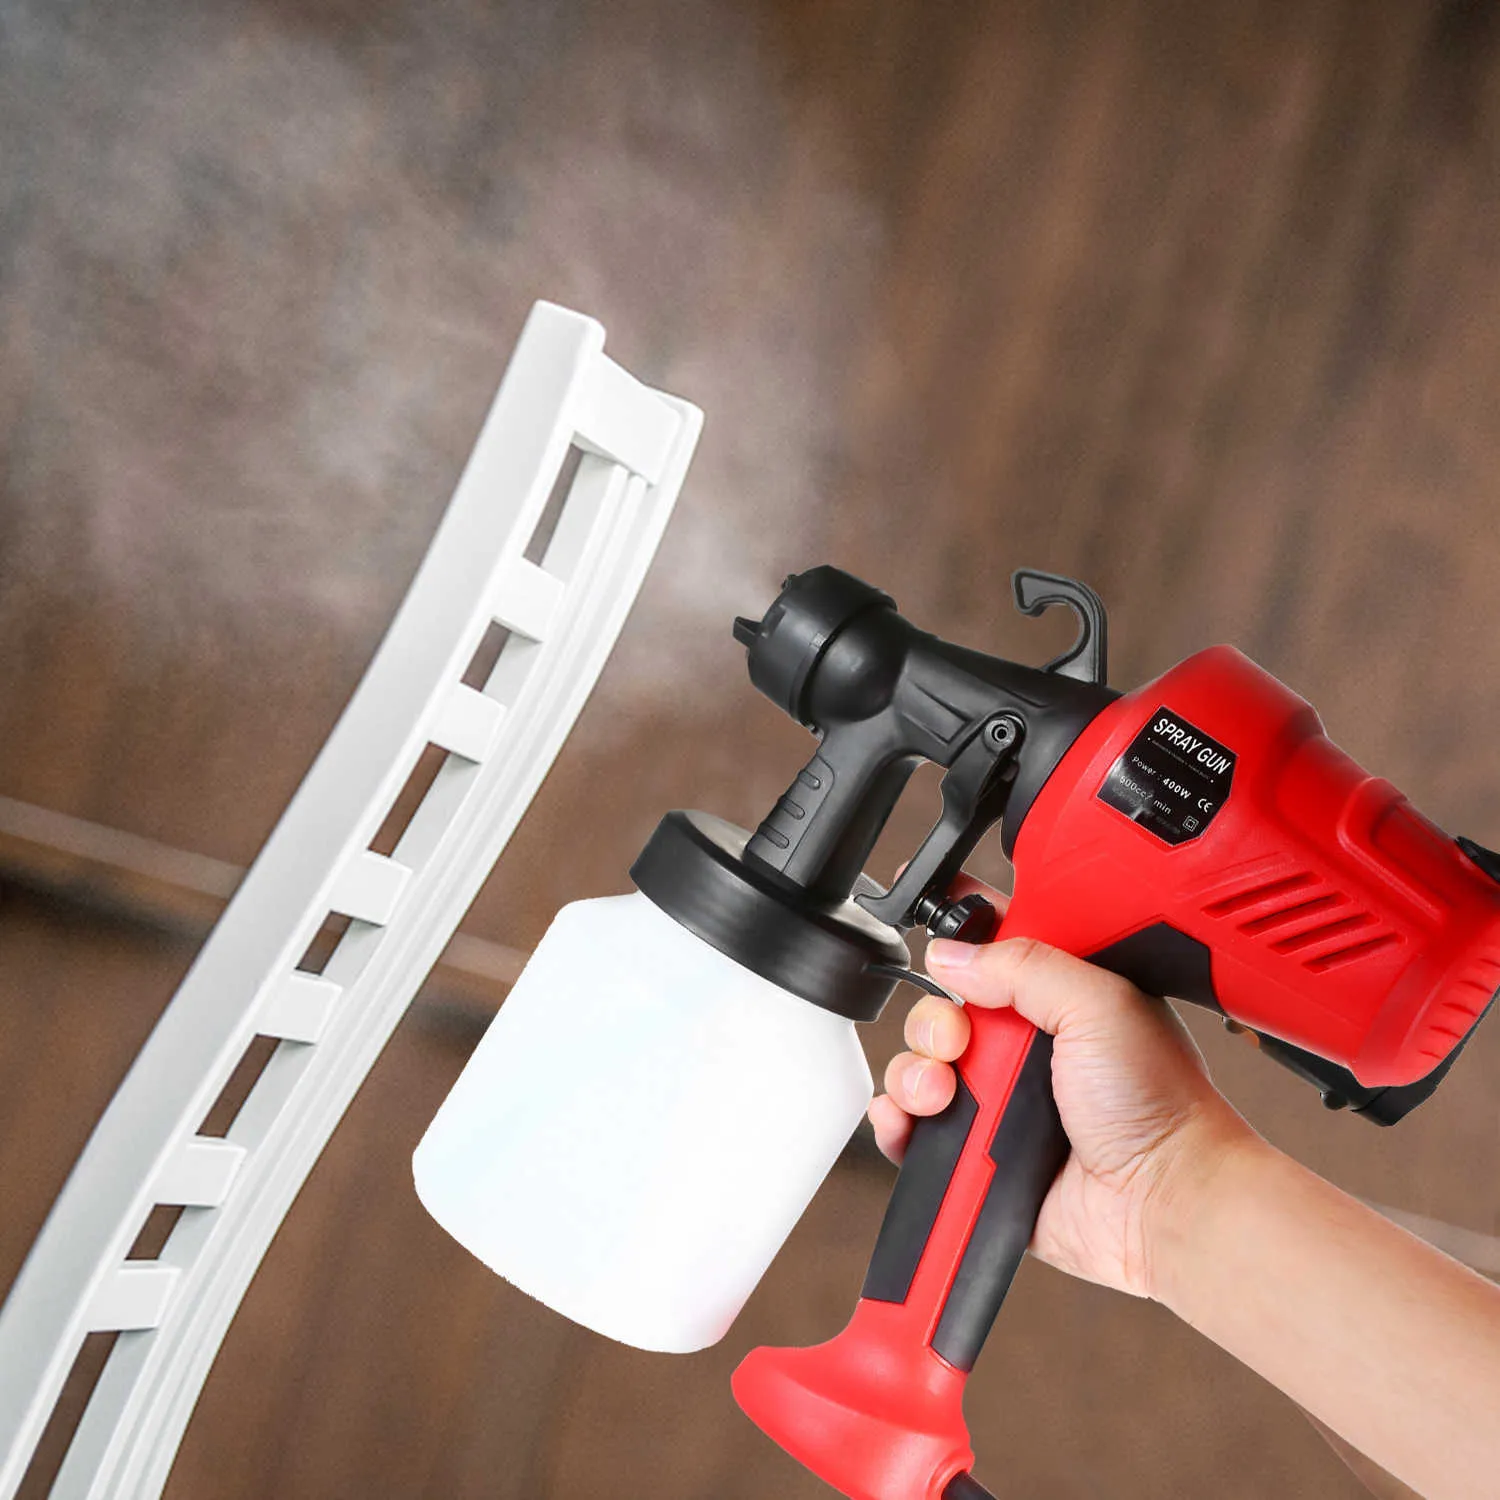 Electric Paint Sprayer Removable Highpressure Paint Spray Gun Adjustable Air and Paint Flow Control EUUK Plug airbrush 2107194259992